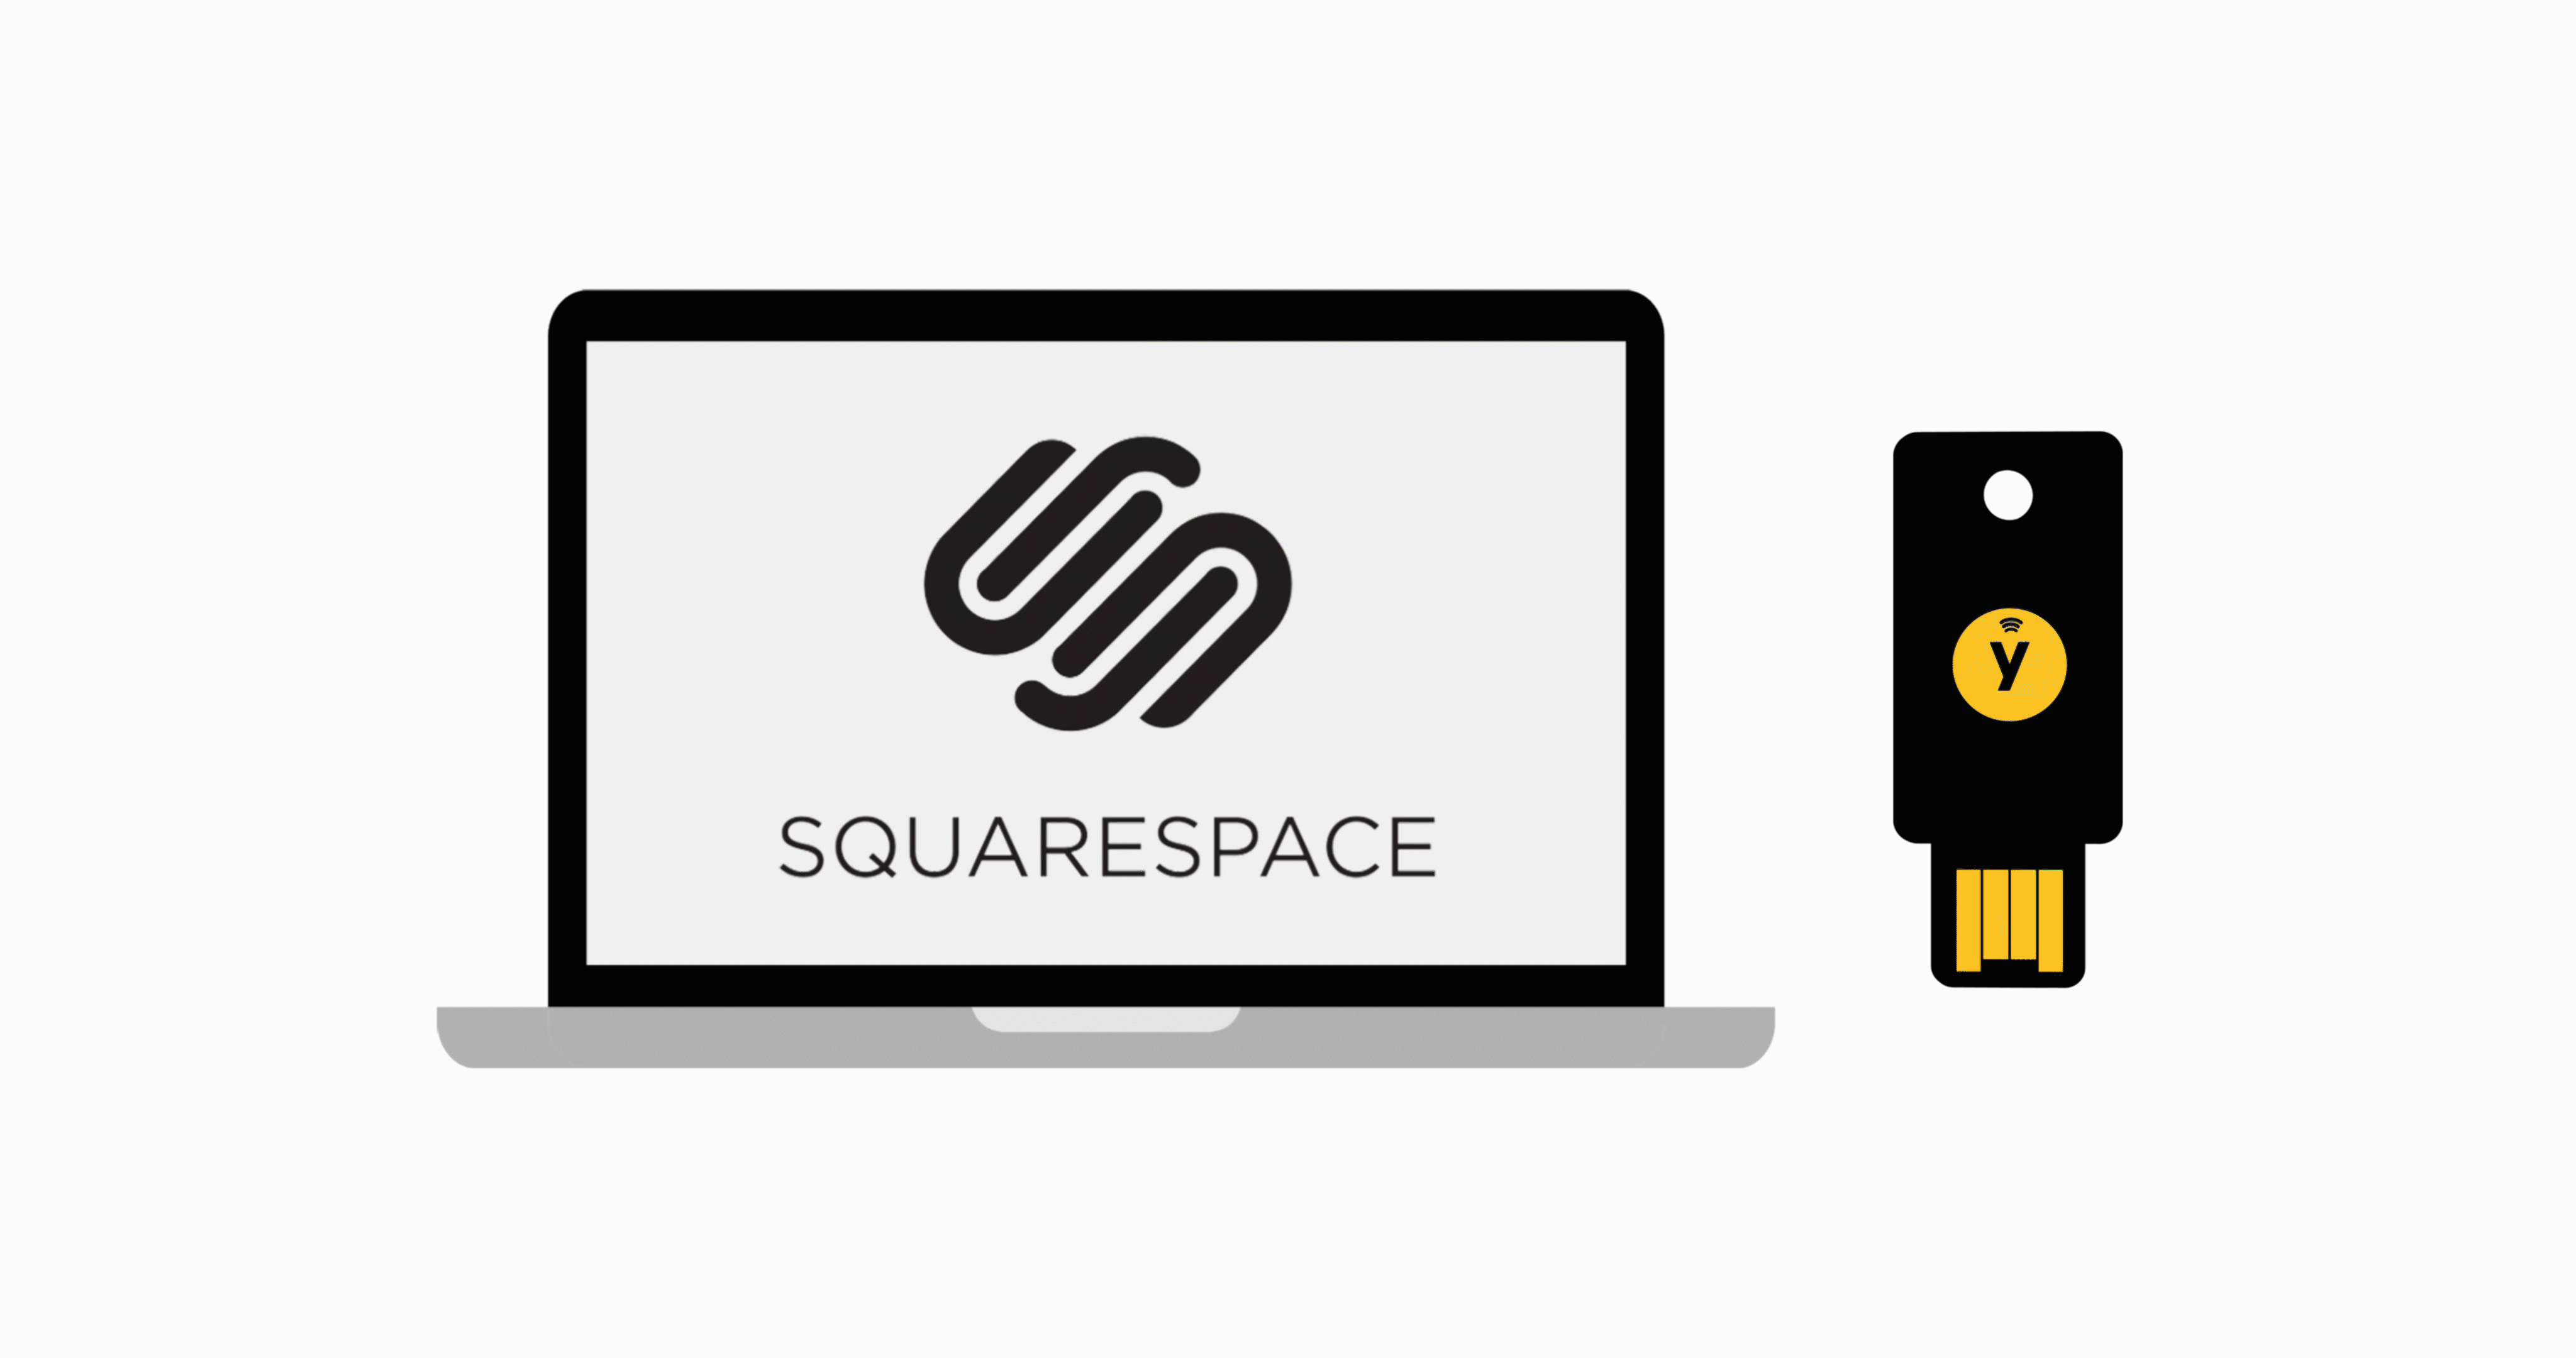 Squarespace main image